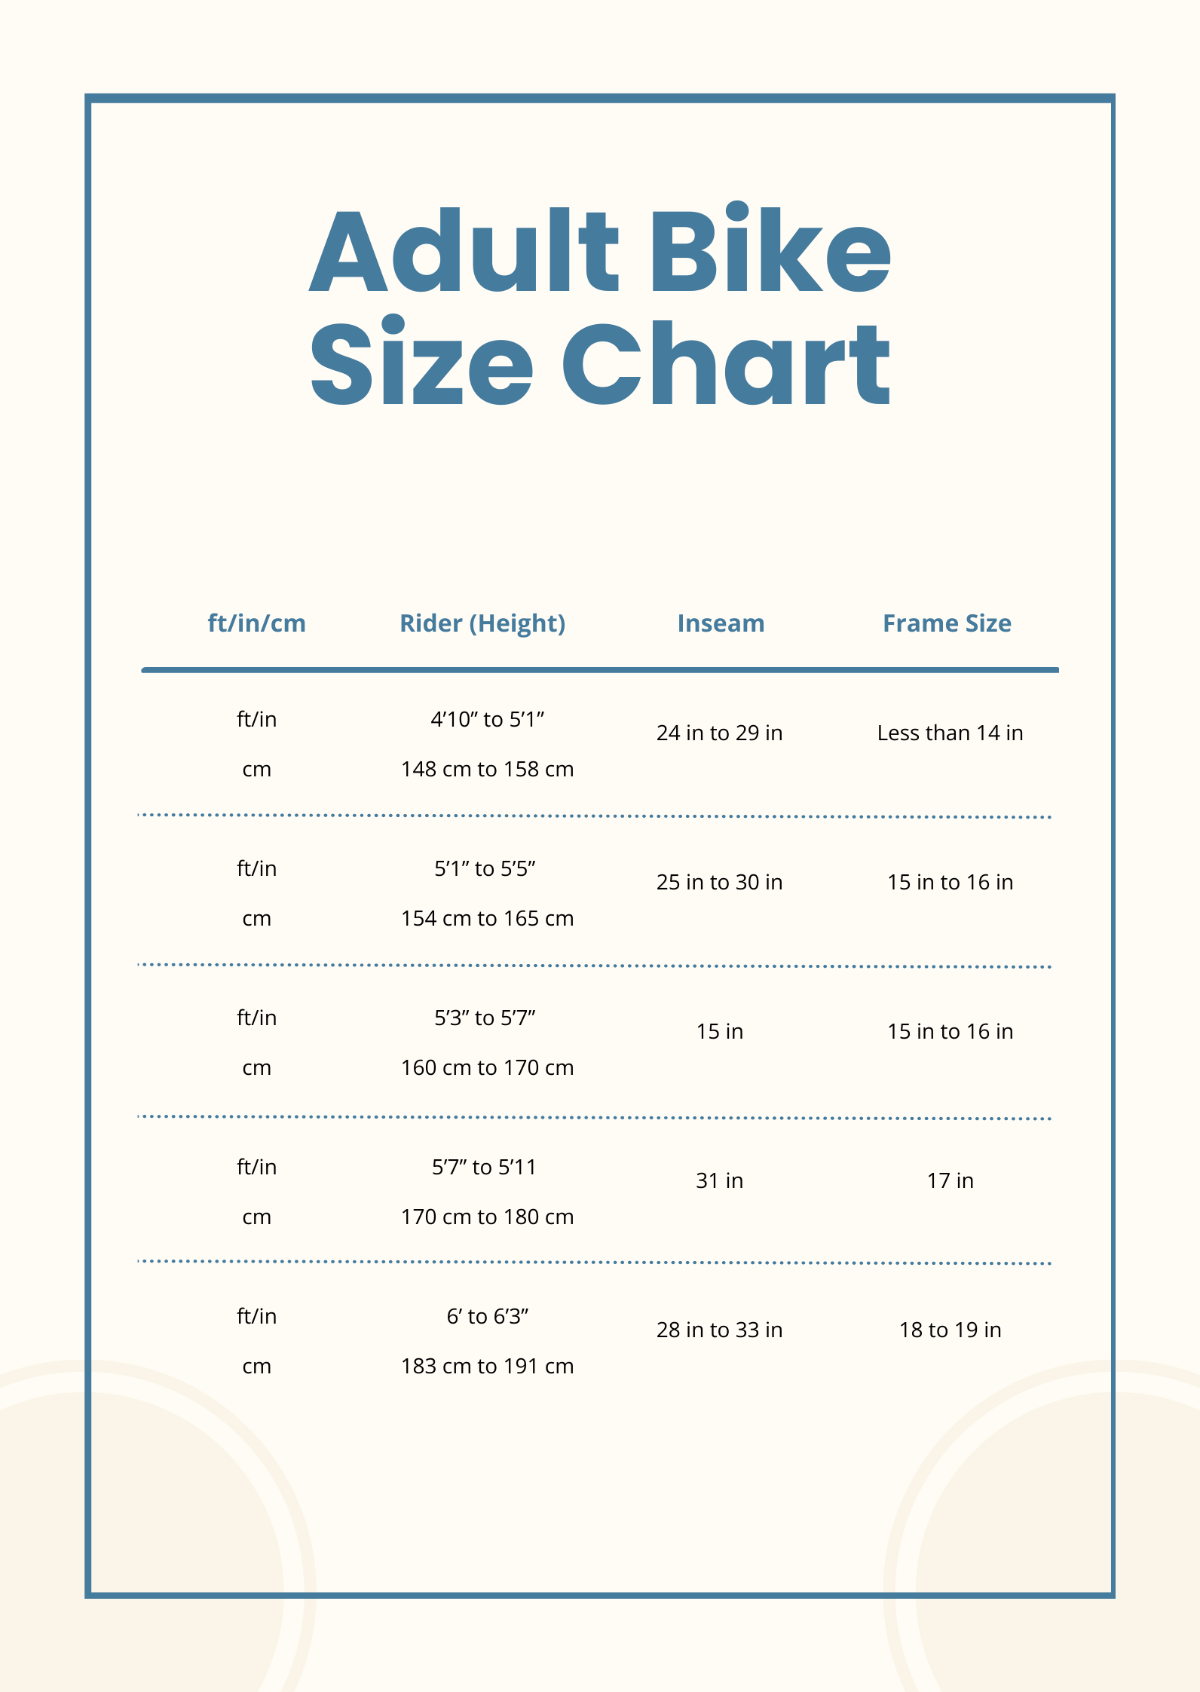 Free Adult Bike Size Chart Template